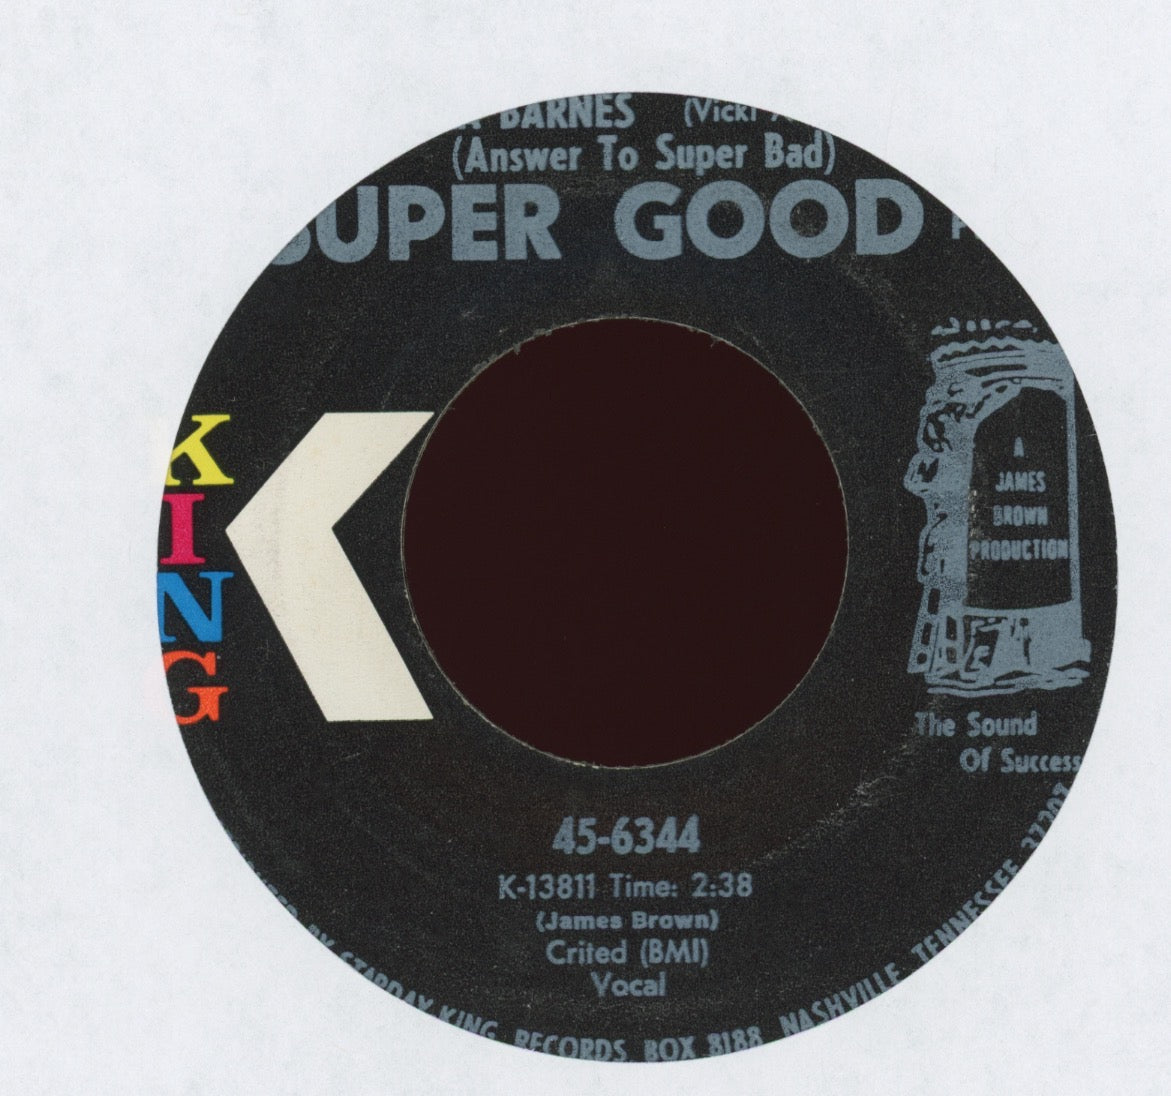 Myra Barnes - Super Good on King Funk 45